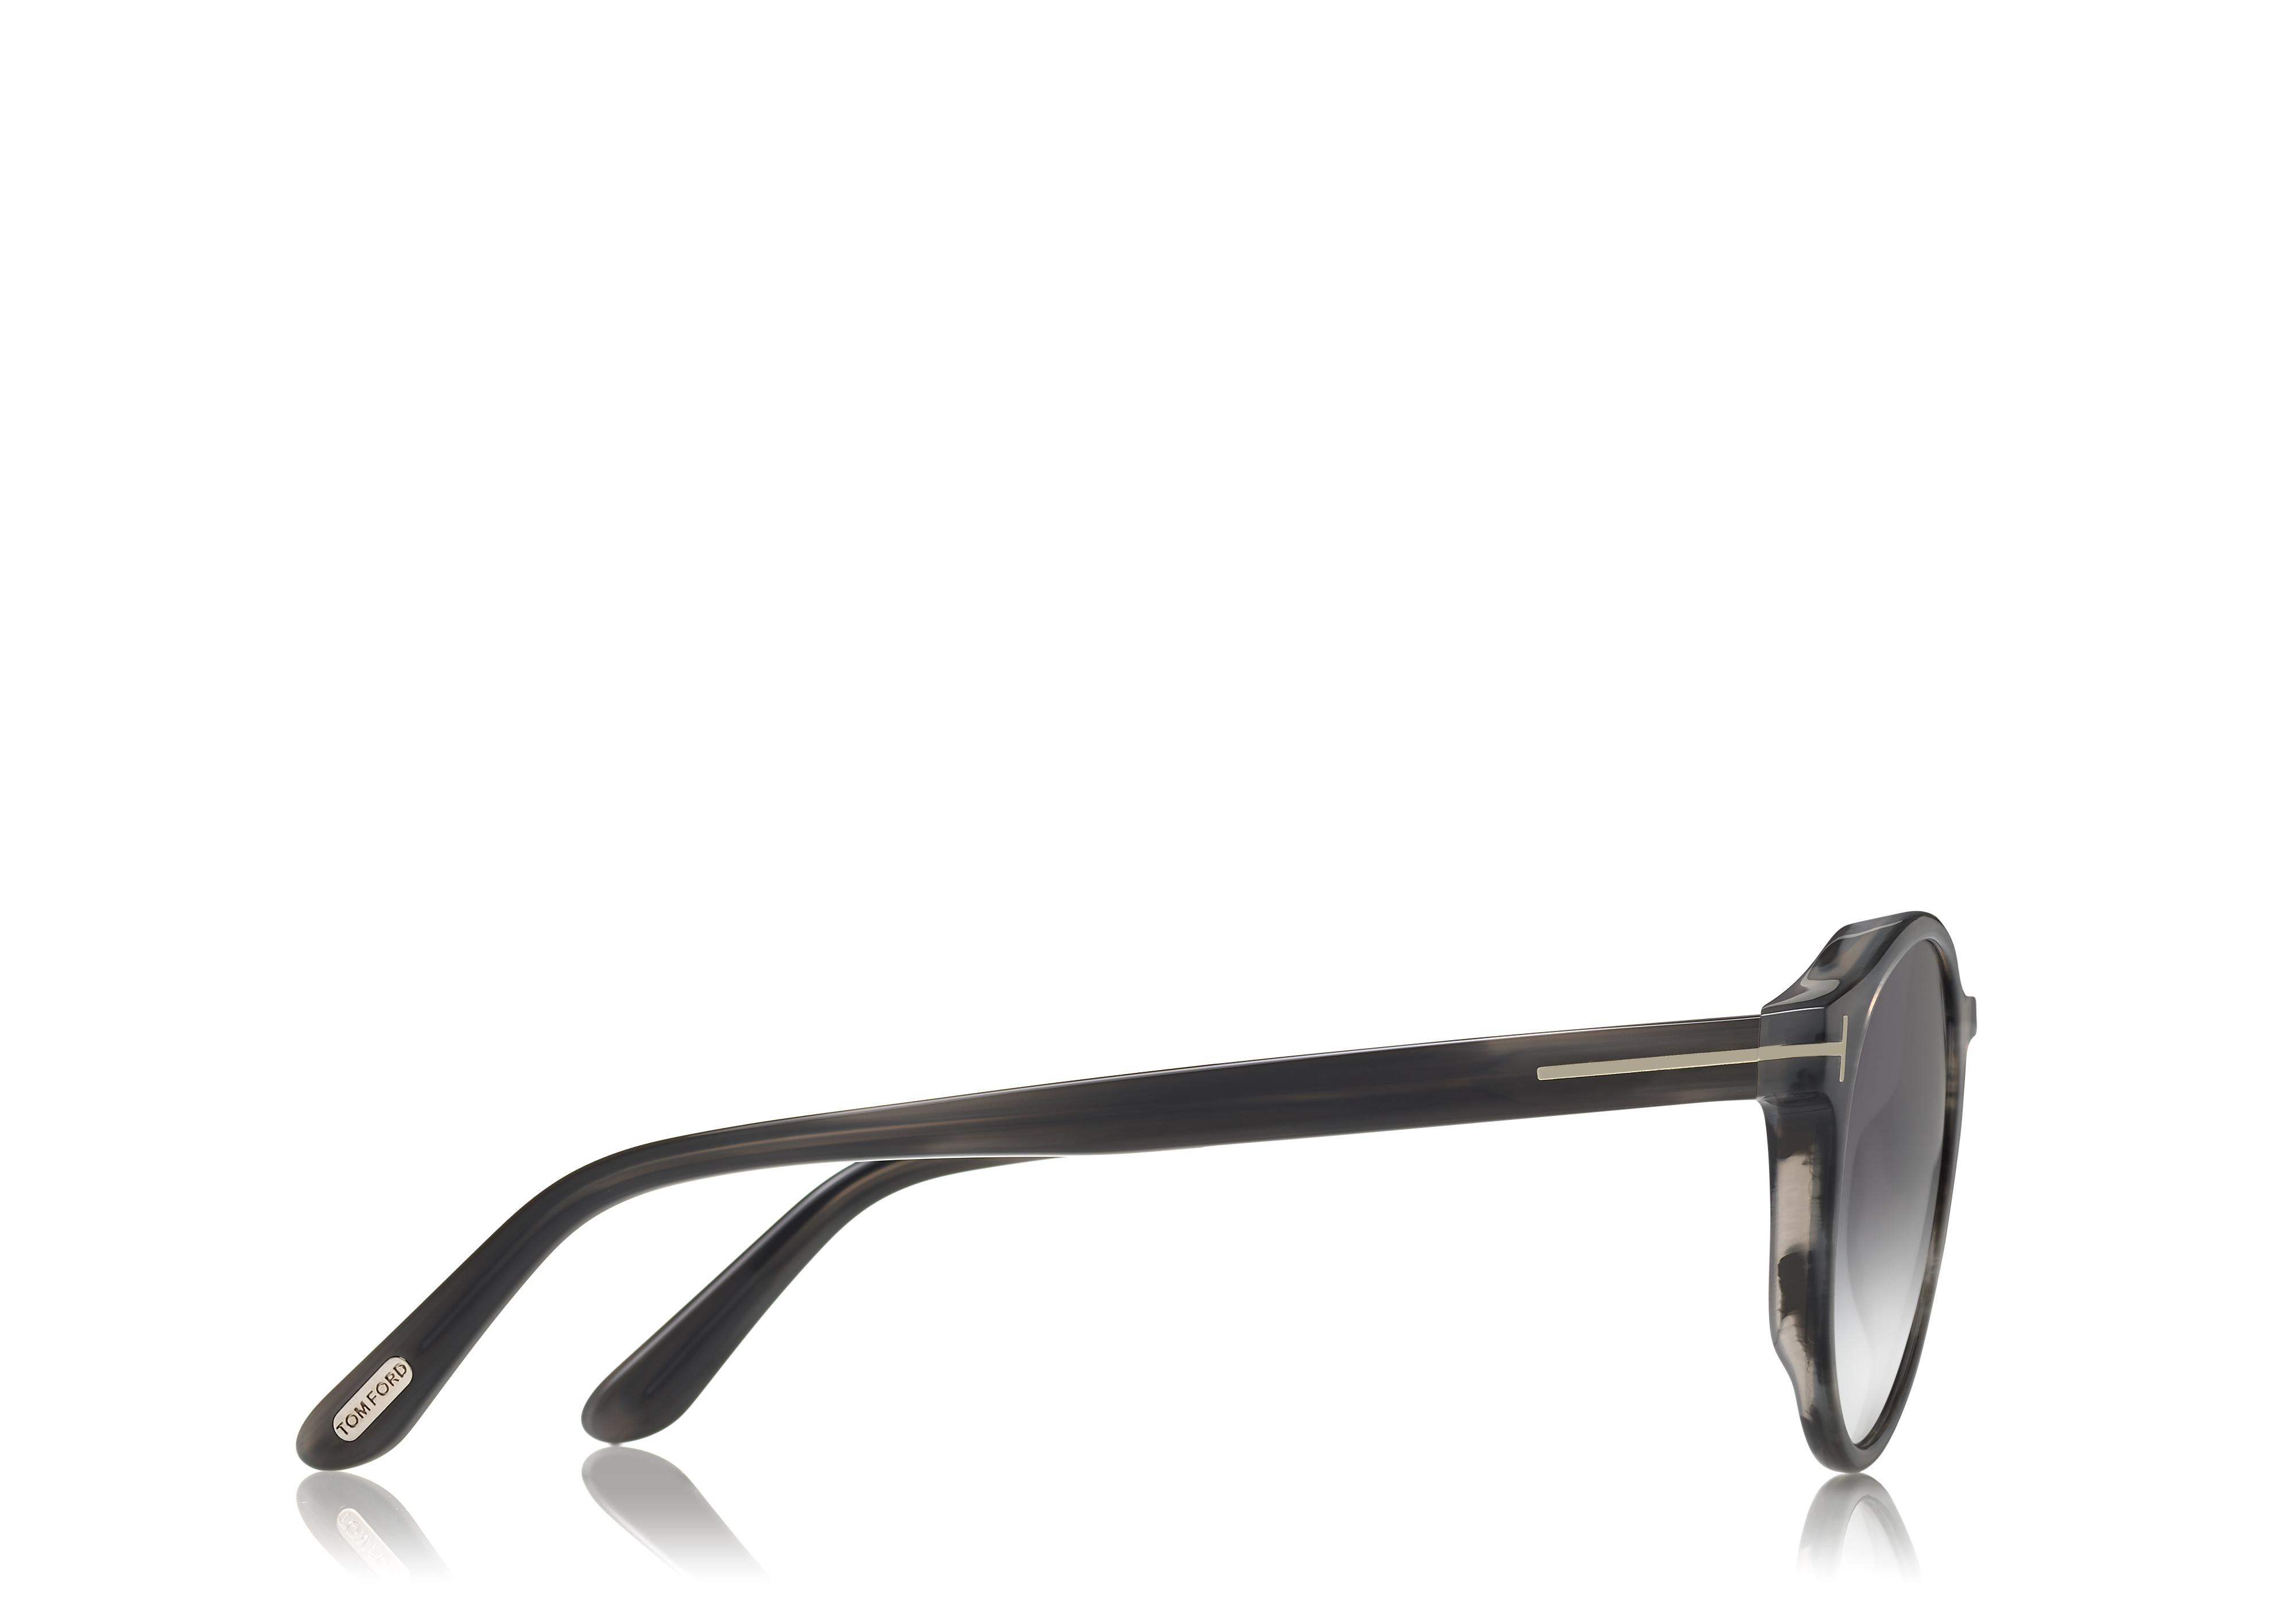 Tom Ford FT0591 01A Shiny Black Ian Round Sunglasses Lens Category 3 Size  51mm